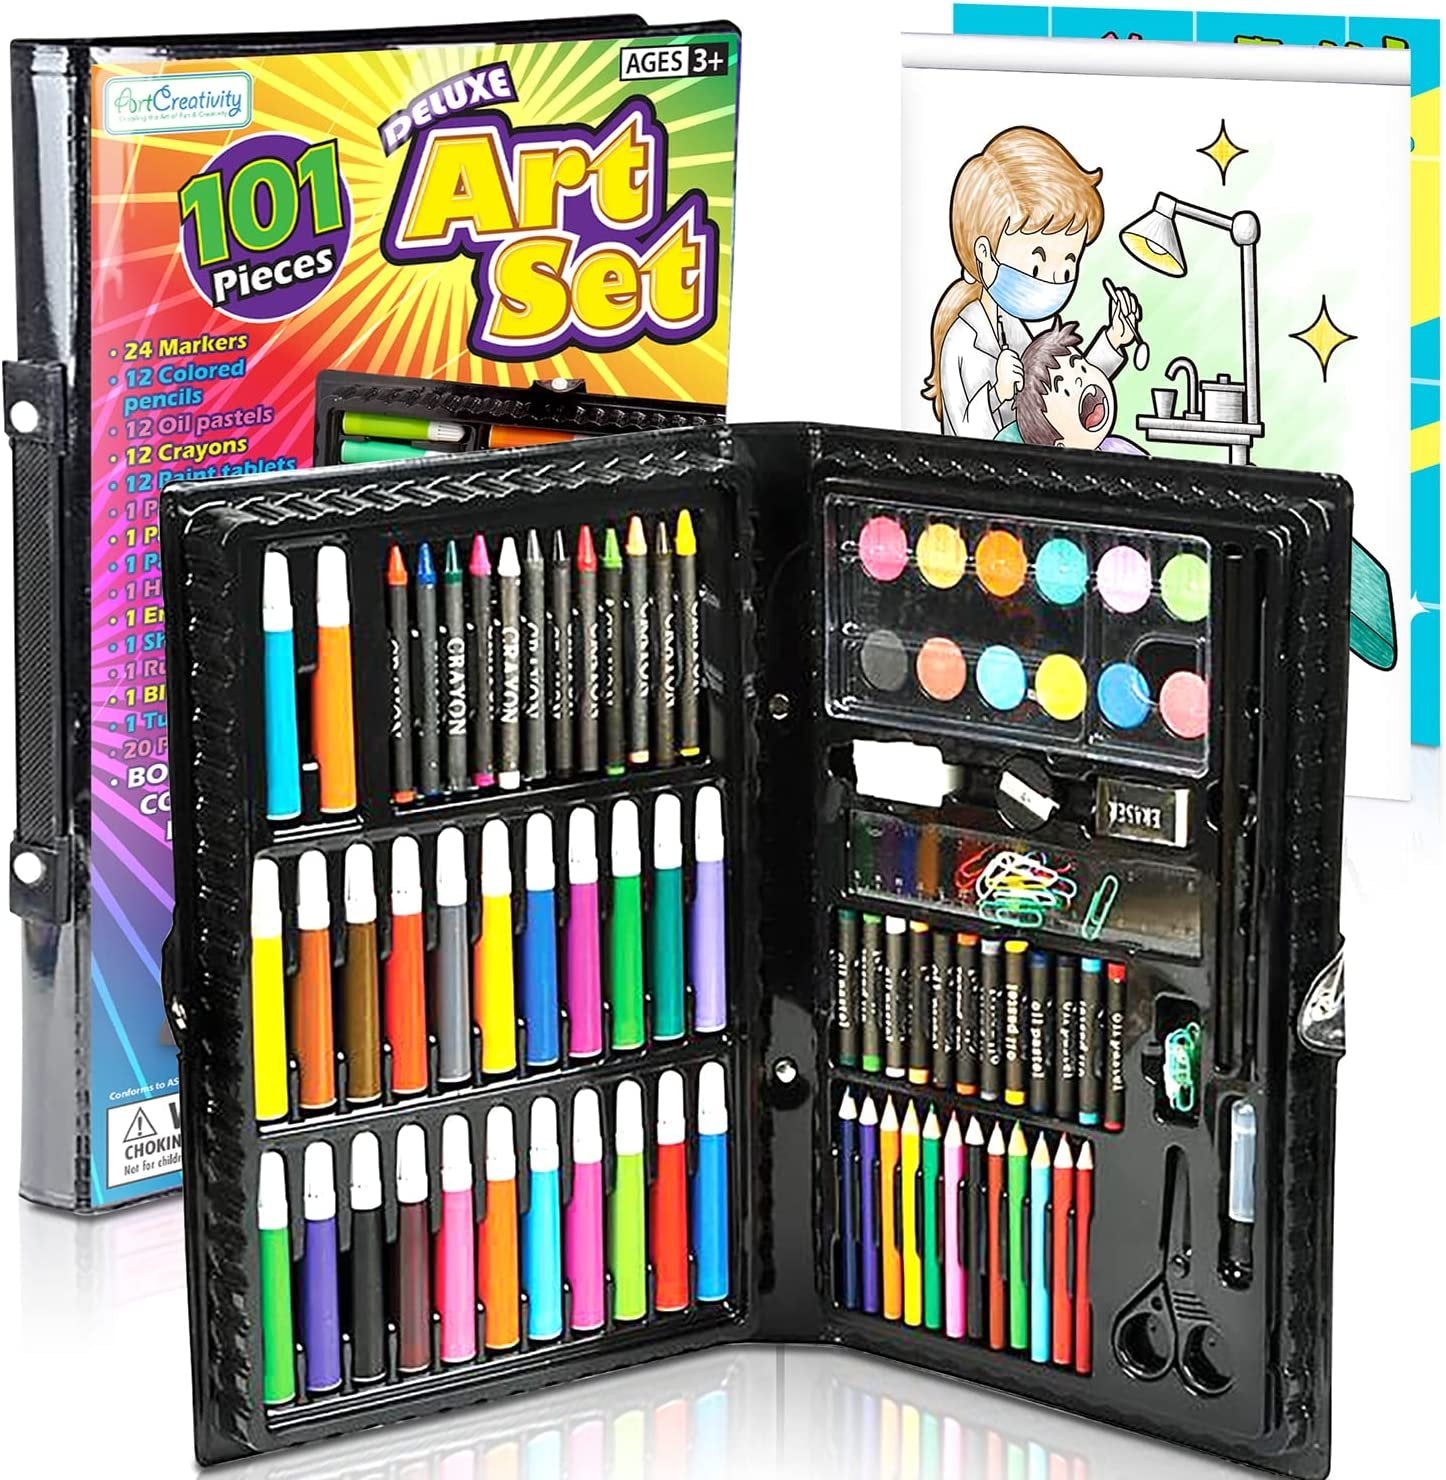 Deluxe Art Set For Kids, Beginner Artist Kit Includes 101 Pieces + Bonus Coloring Book